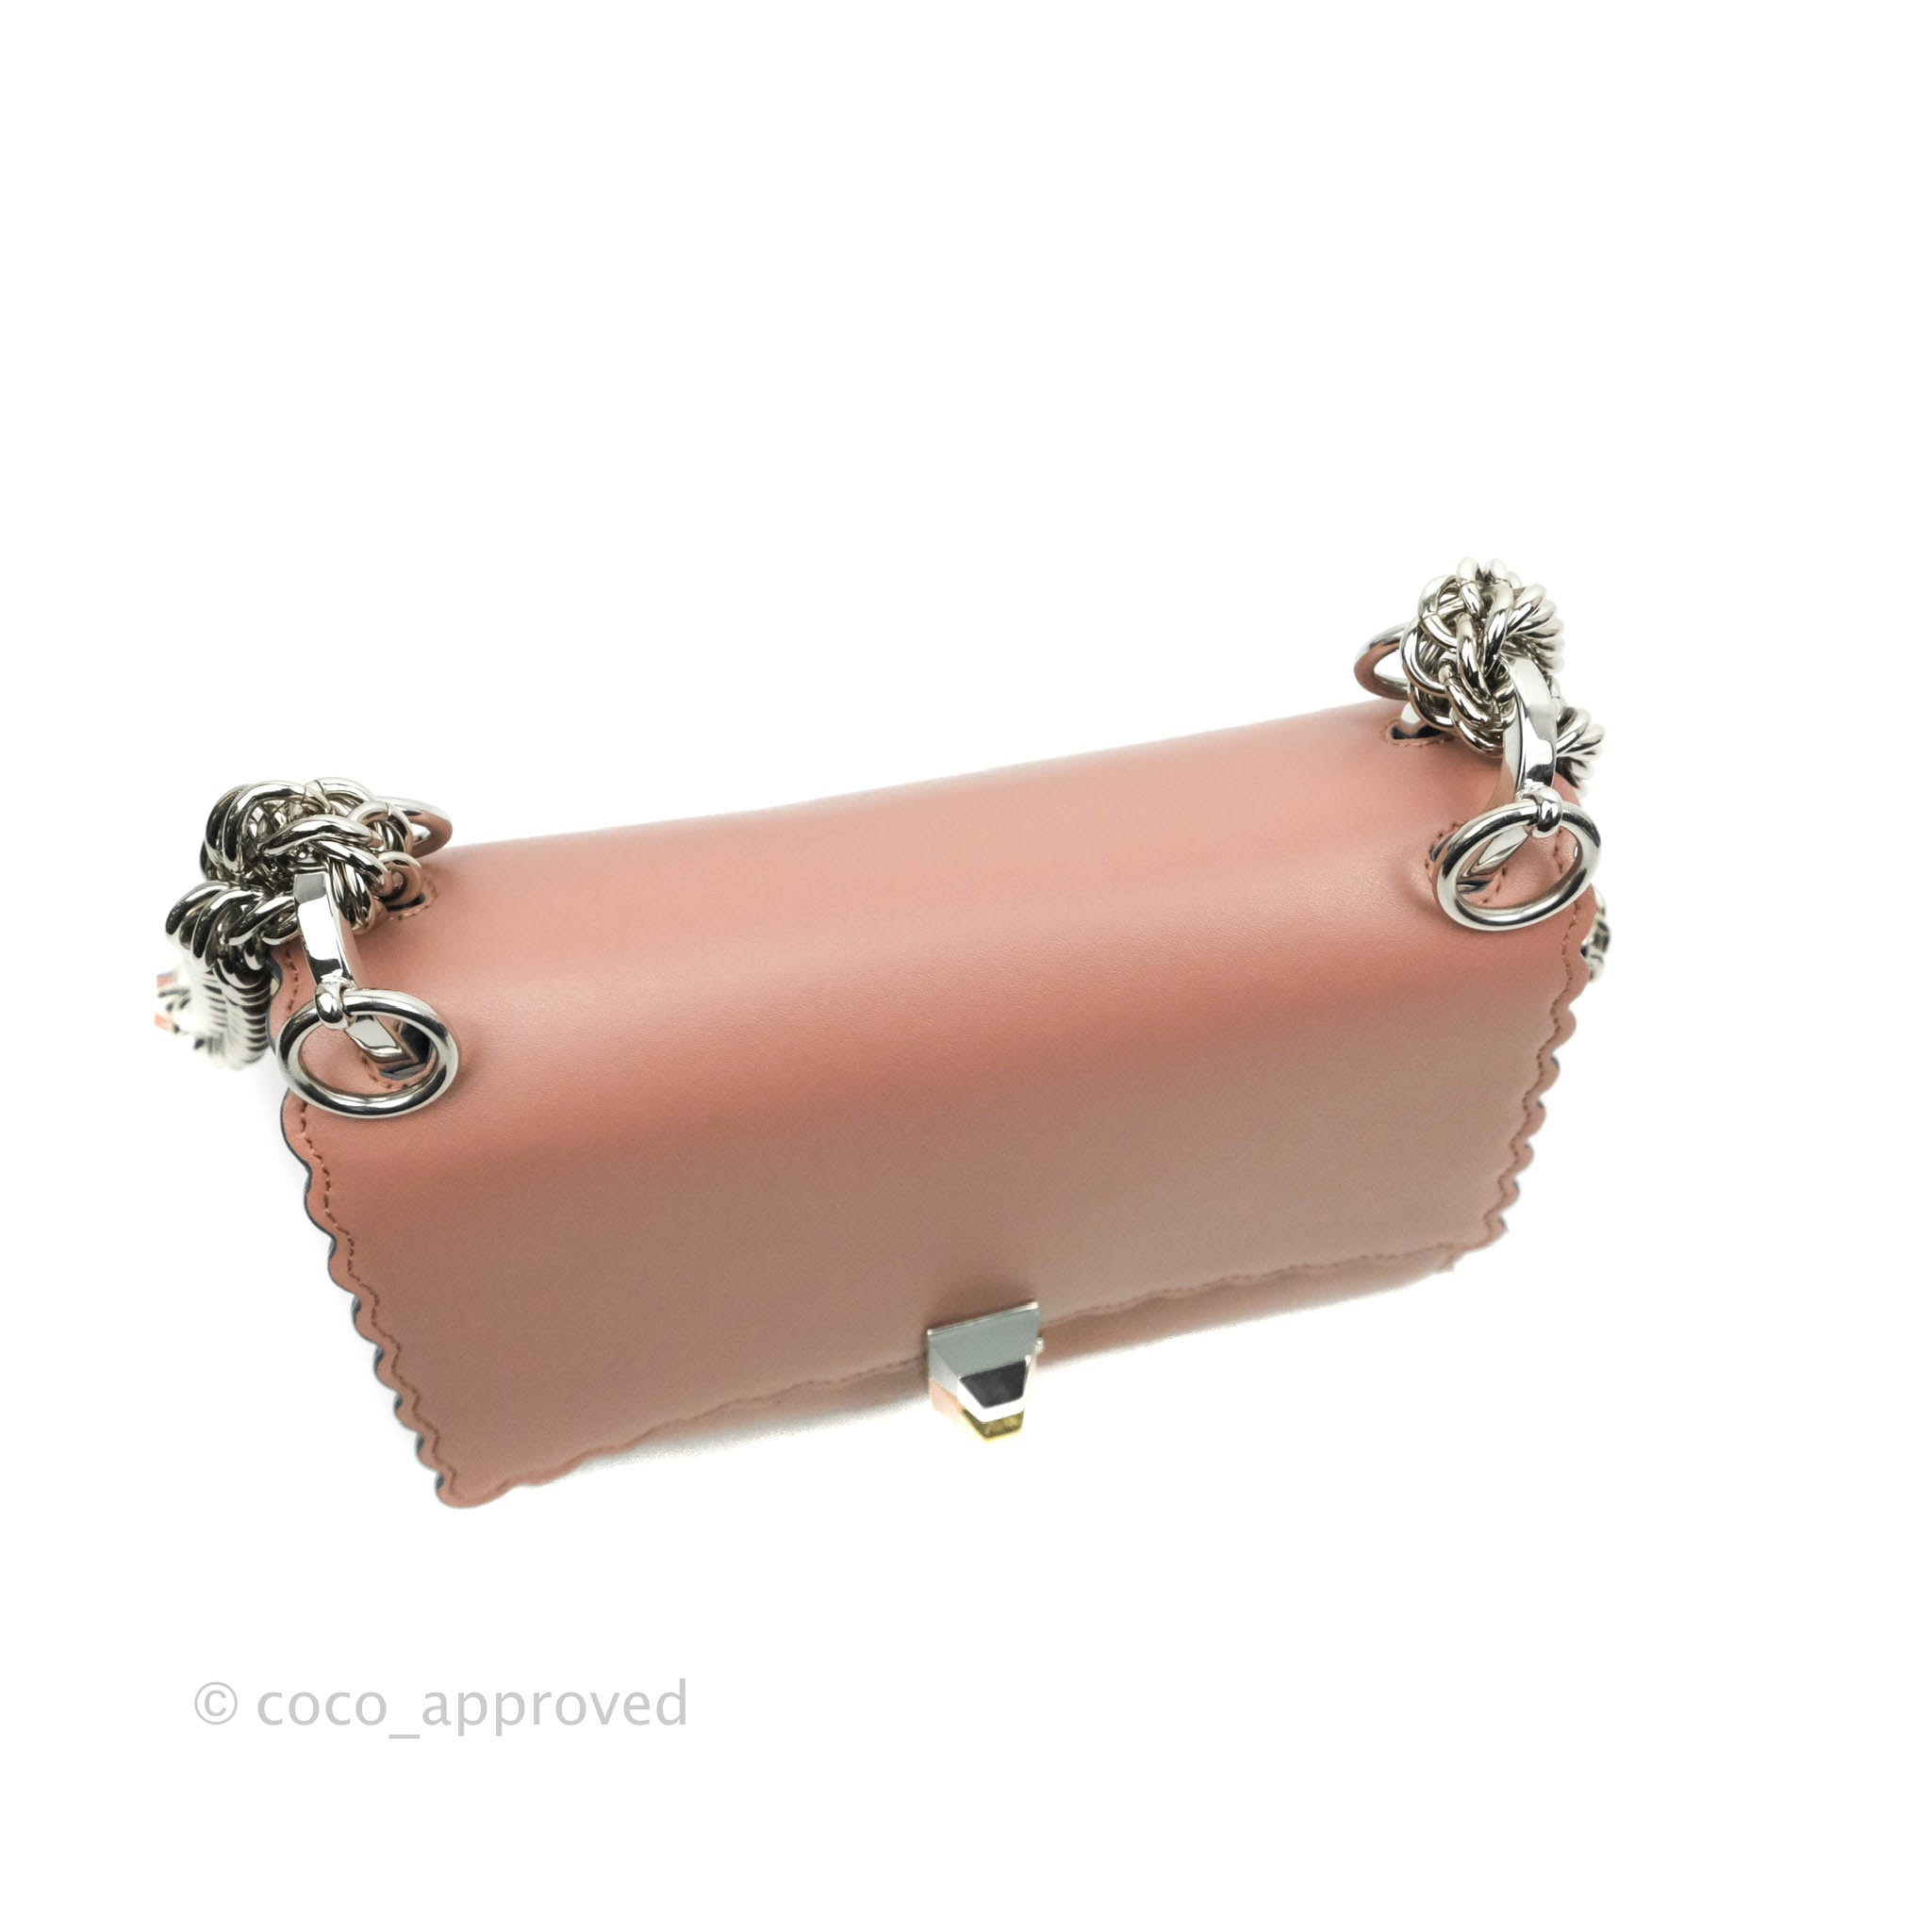 Fendi Kan I F Wallet On Chain Mini Bag In Pink